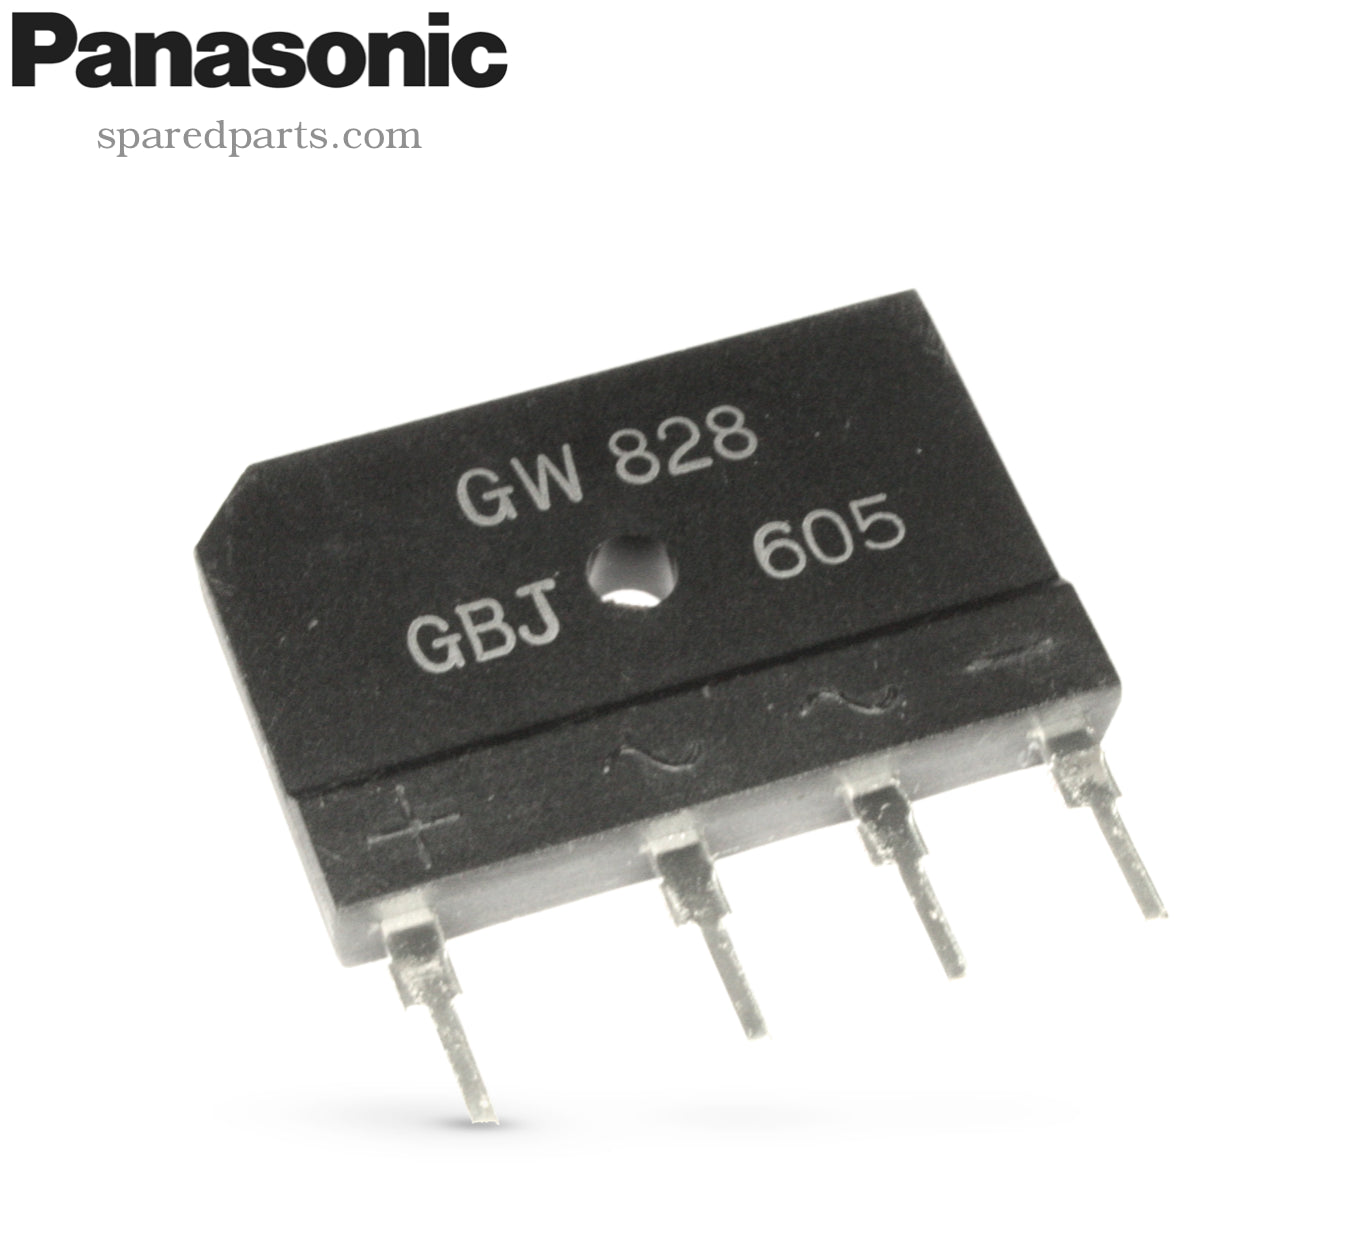 Panasonic GW828 GBJ605 Diode B0FBAR000041